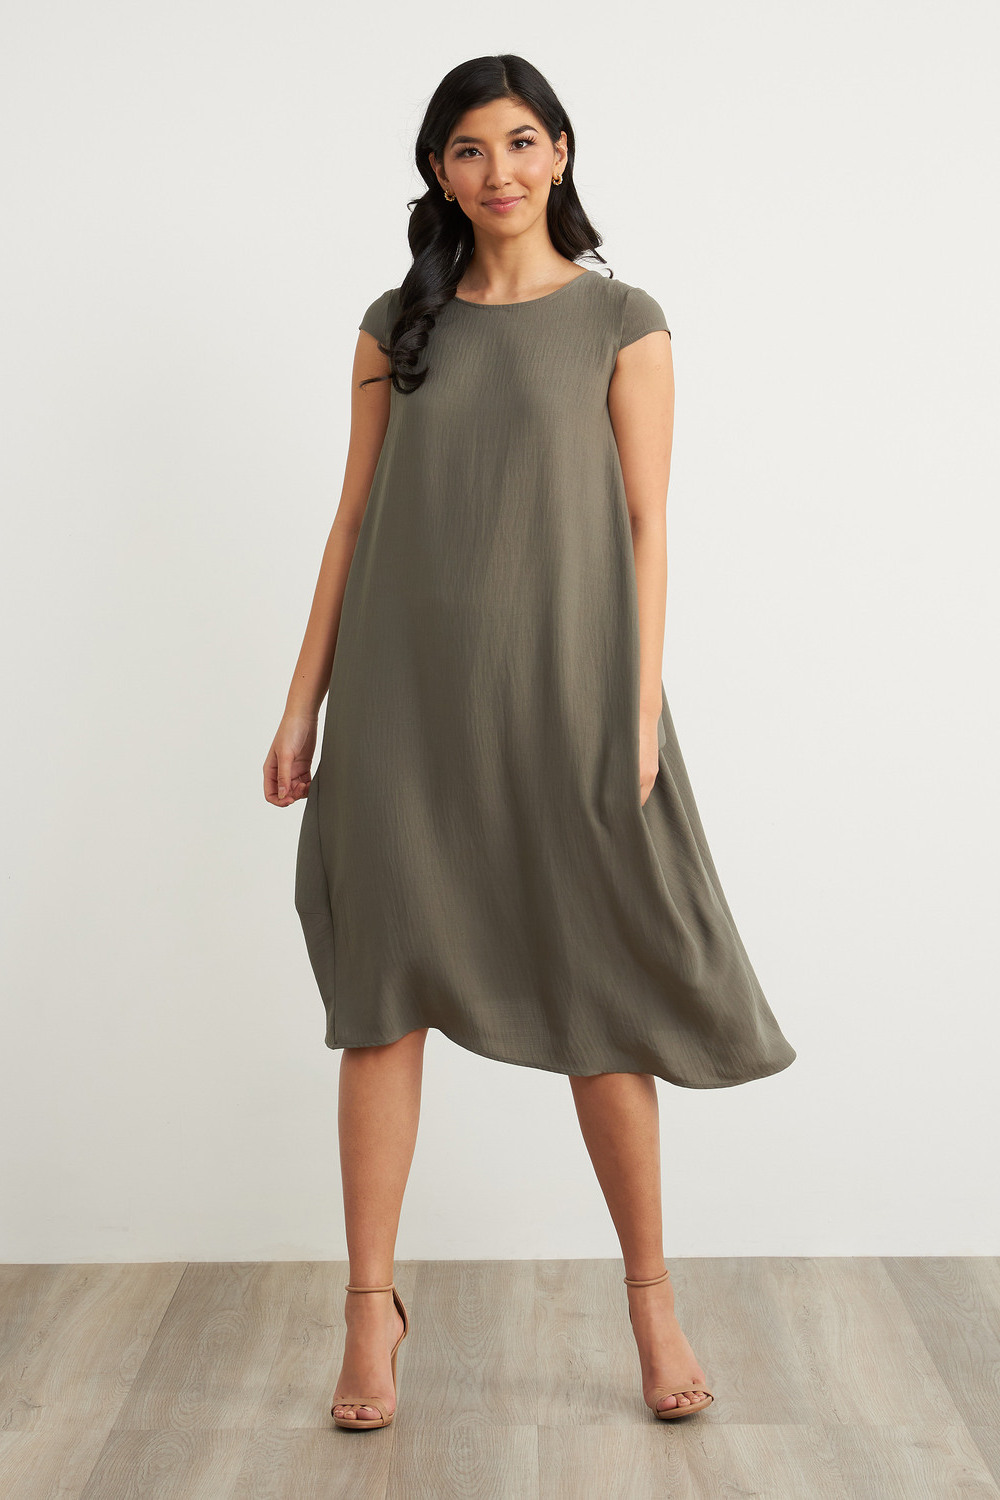 Joseph Ribkoff Short Sleeve Maxi Dress Style 212283. Eucalyptus